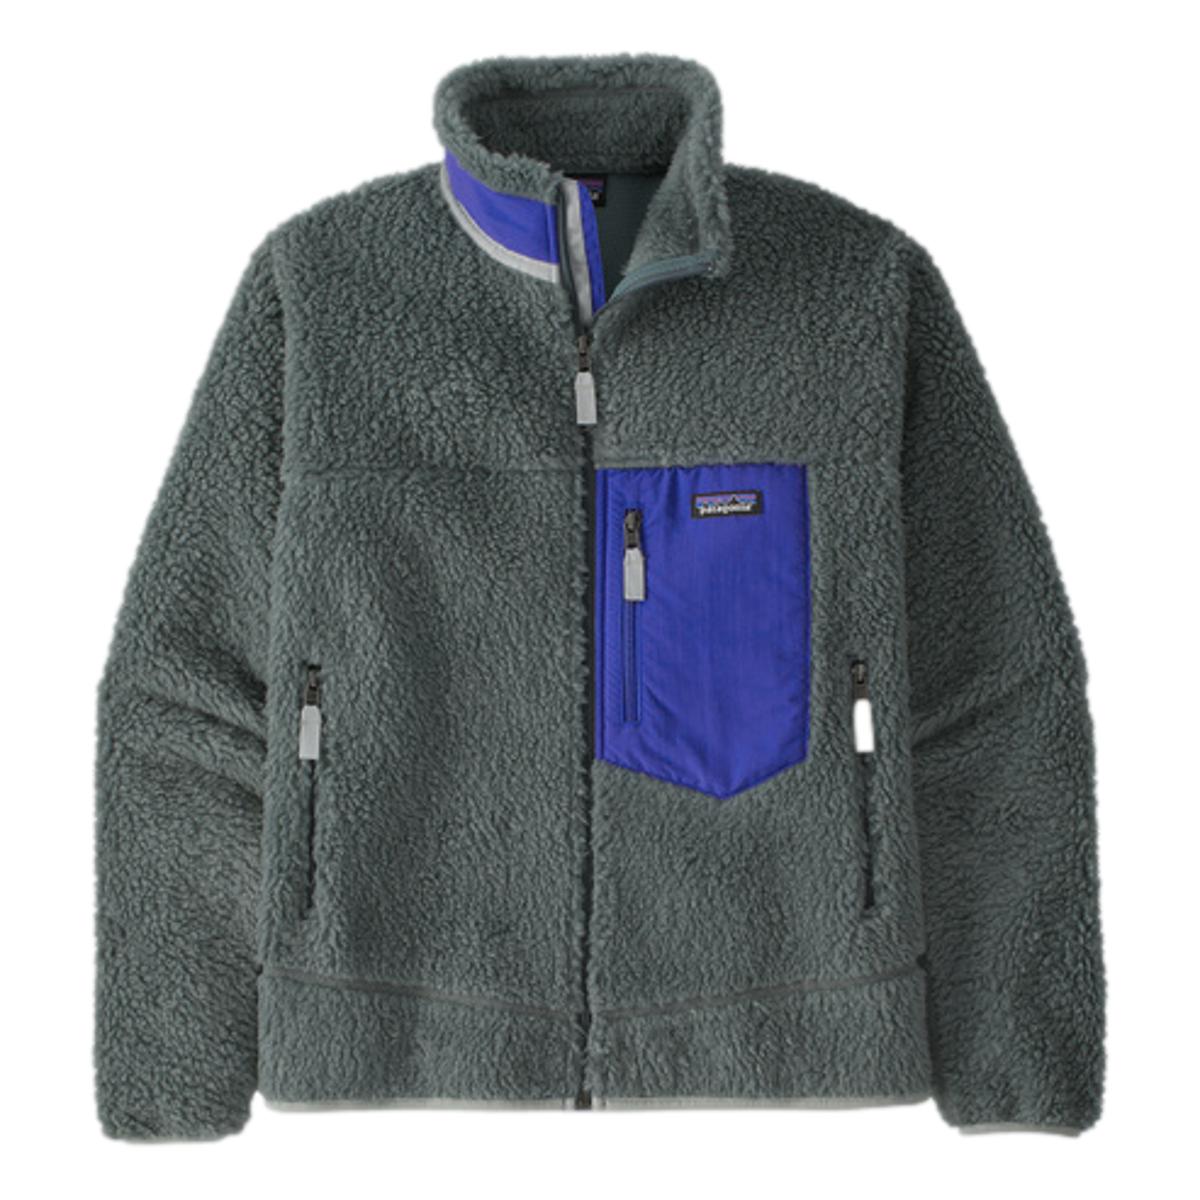 Classic Retro-X® Fleece Jacket Nouveau Green - Fleece